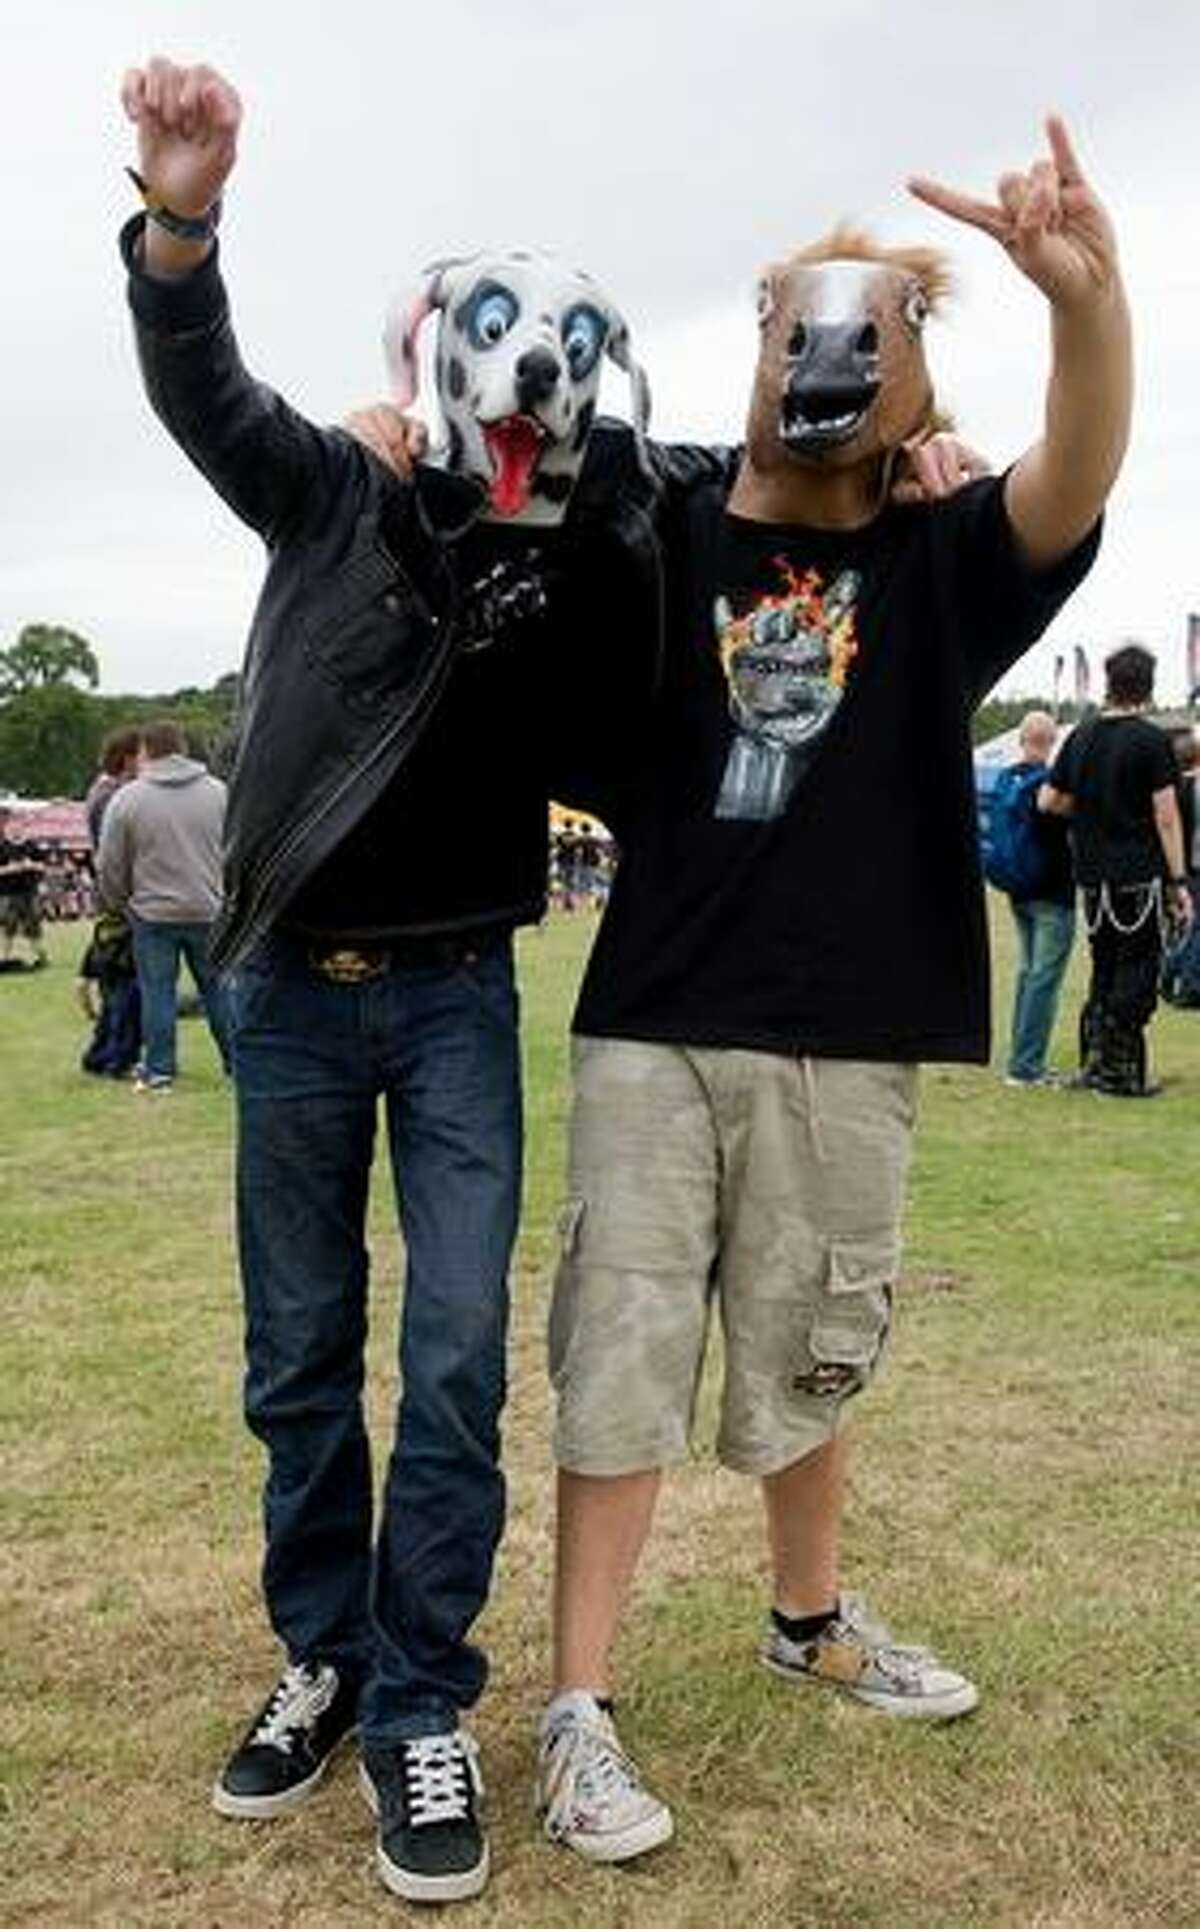 Two revellers wear animal masks at the Sonisphere rock festival at Knebworth, UK.